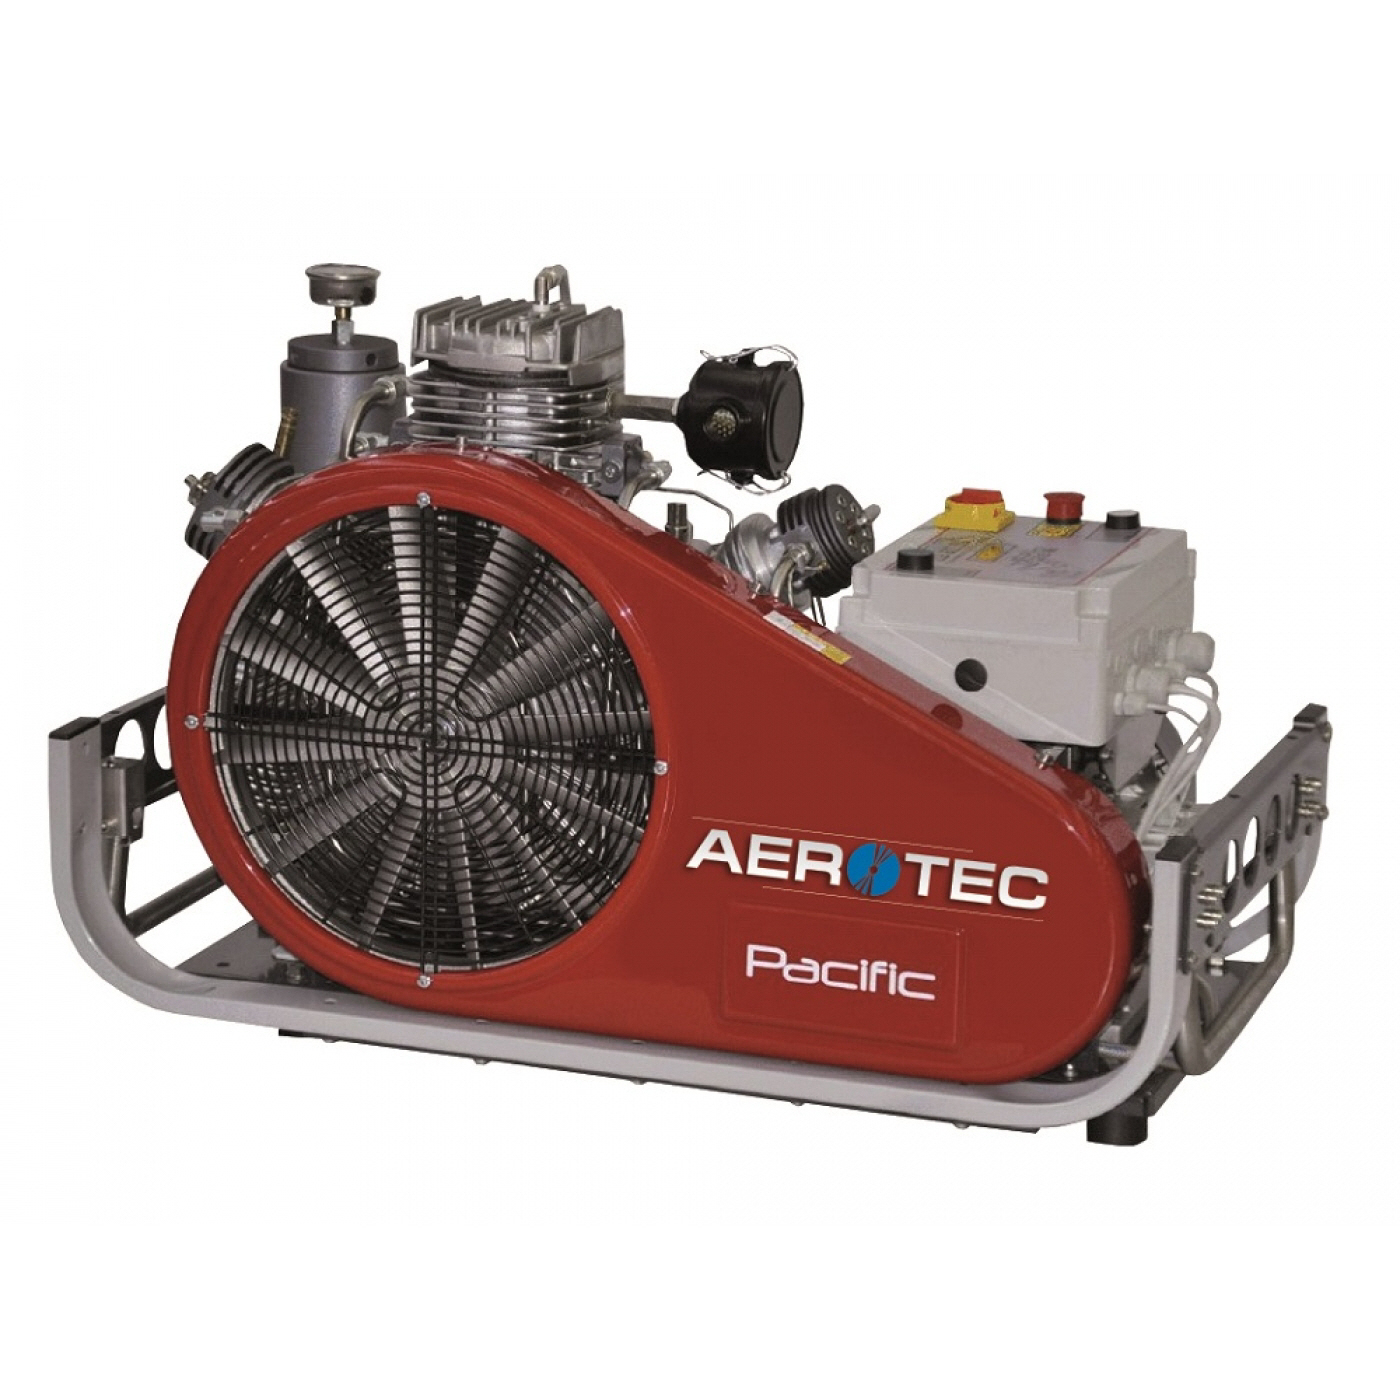 AEROTEC Kolbenkompressor PACIFIC E 16 - 330 bar Tauchkompressoren